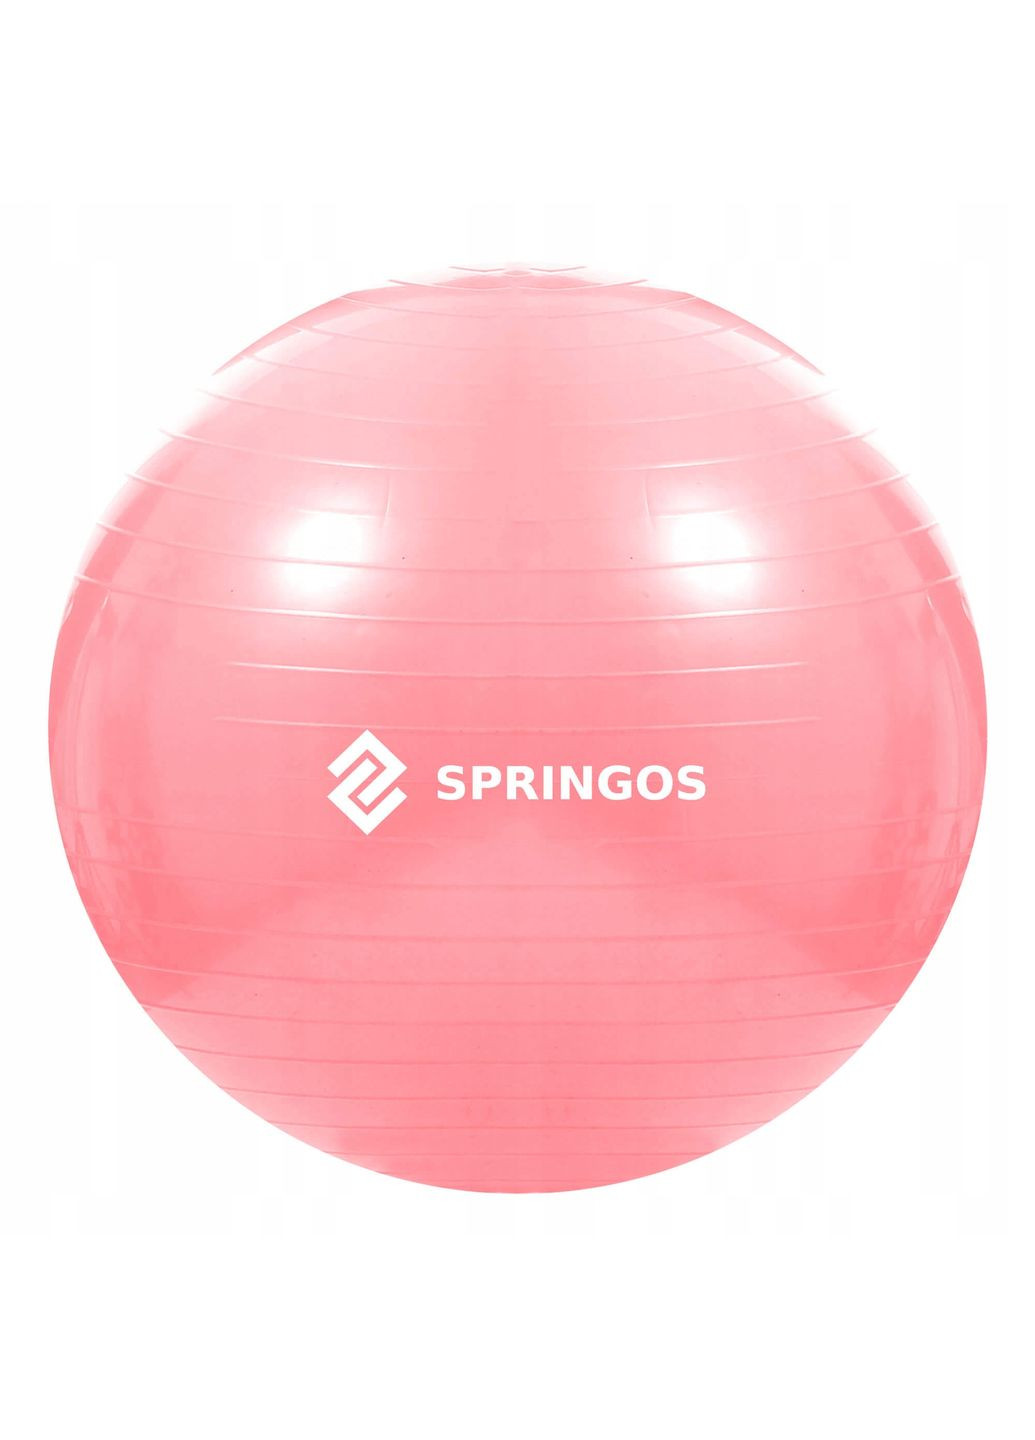 М'яч Springos fb0012 (275333910)